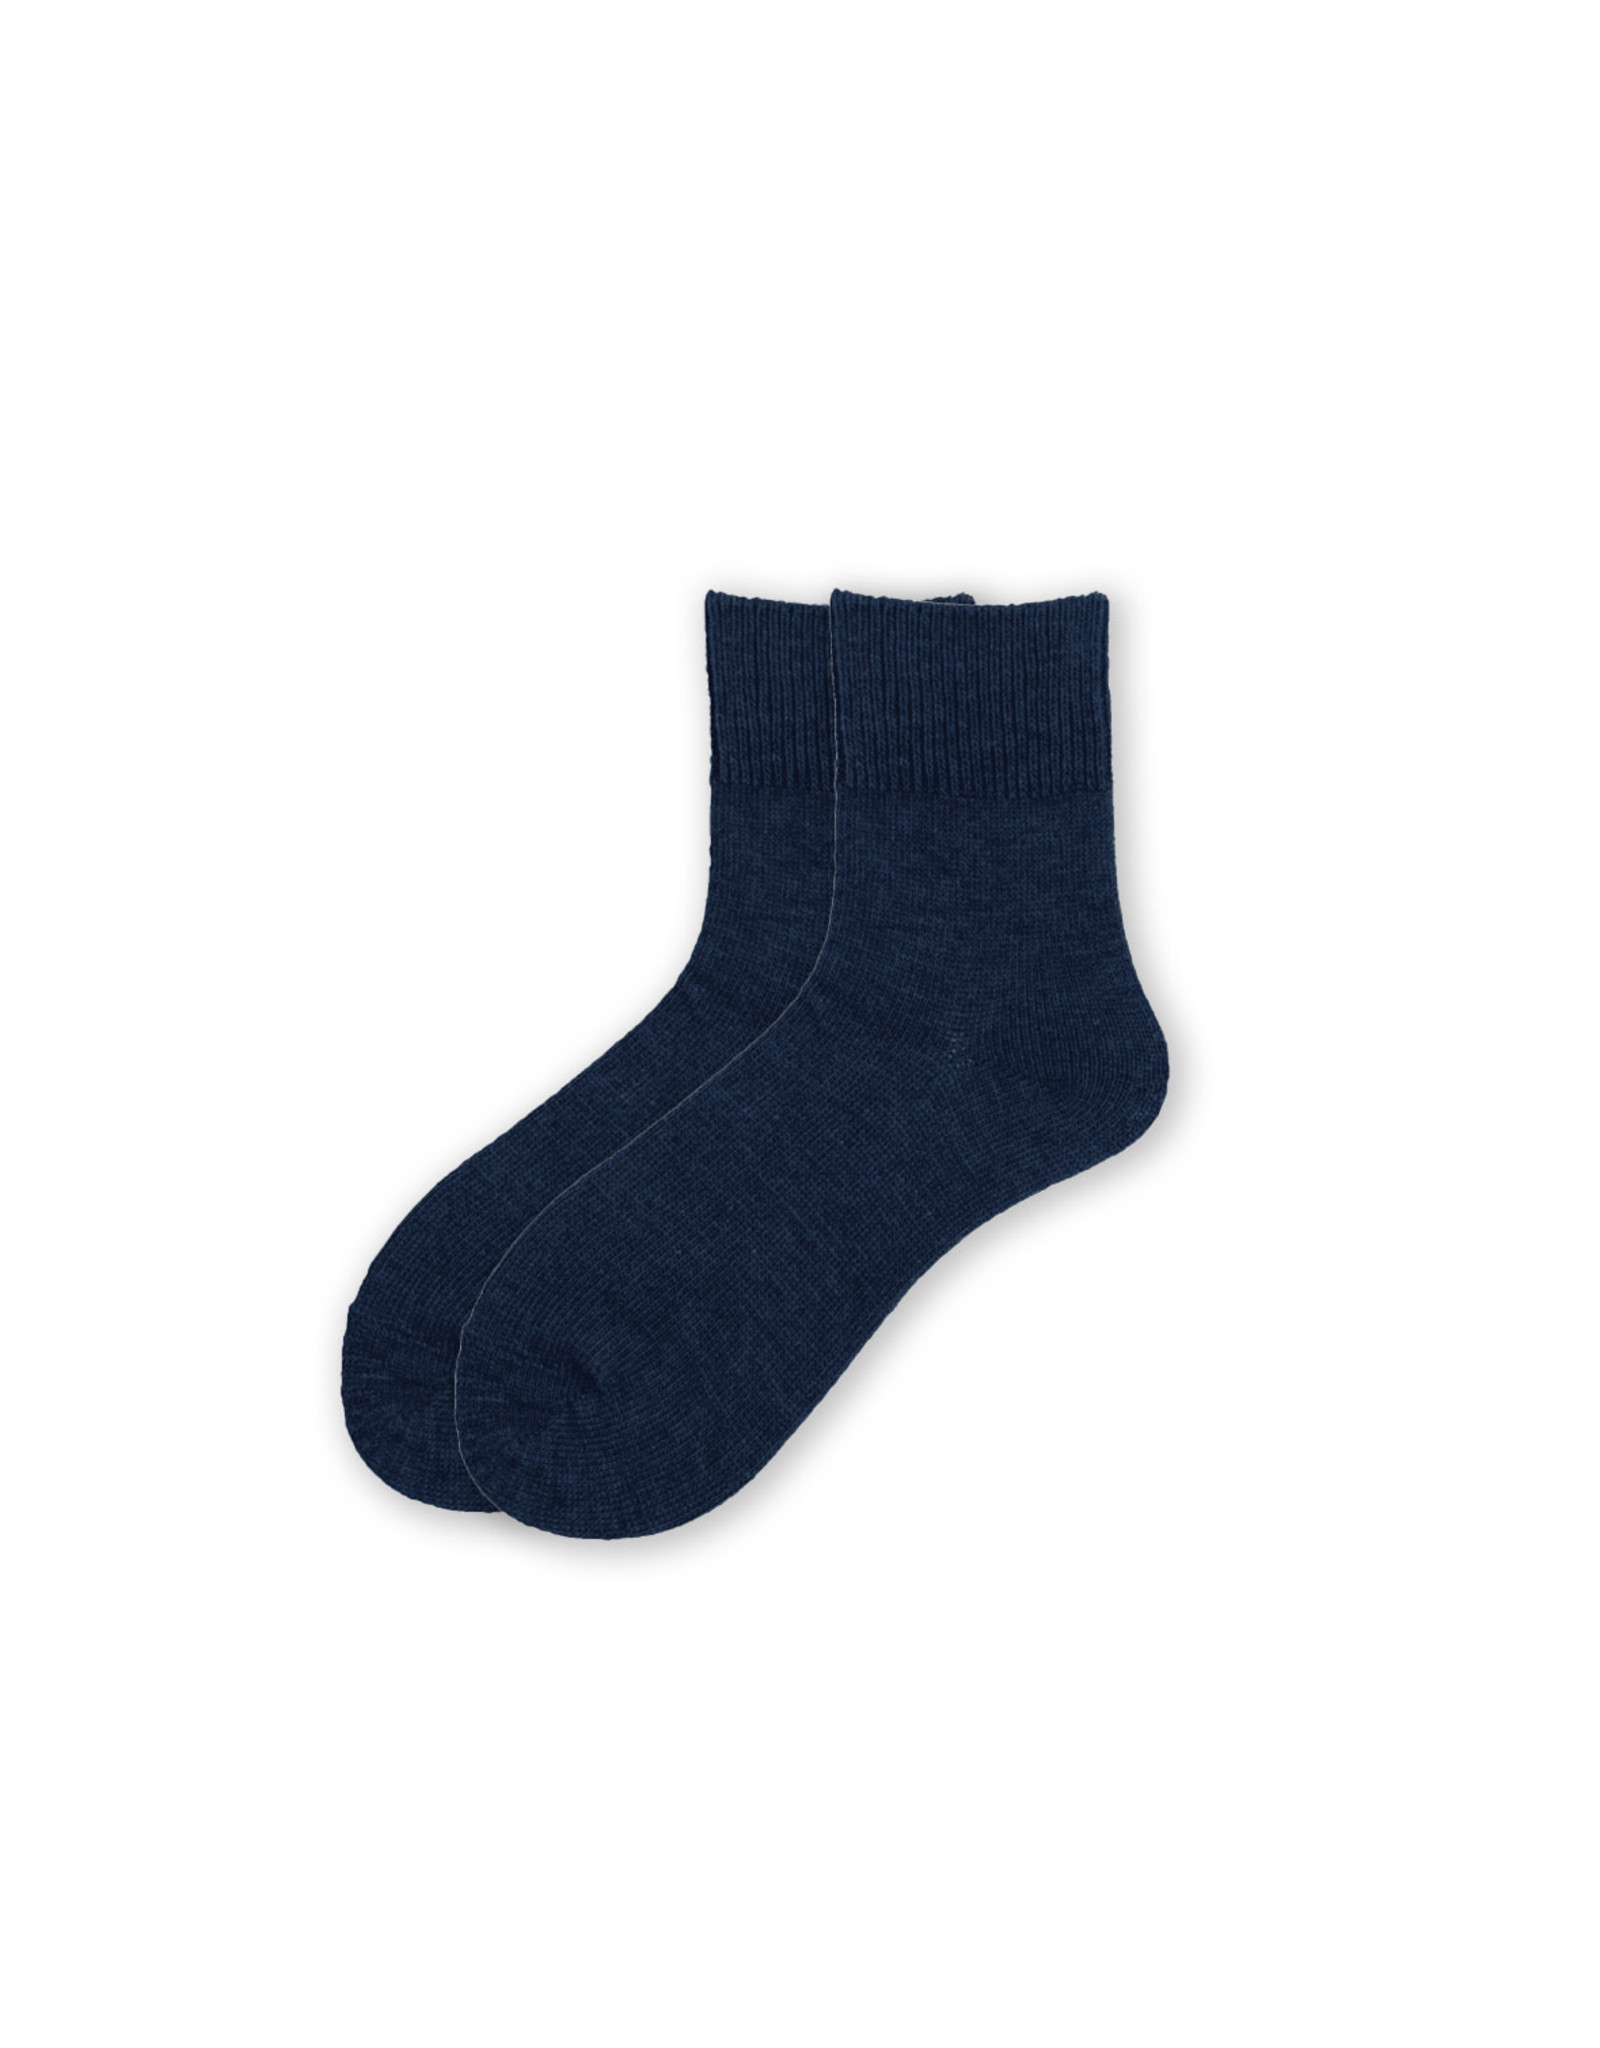 BGS XS Unified - Sweater Socks / Navy